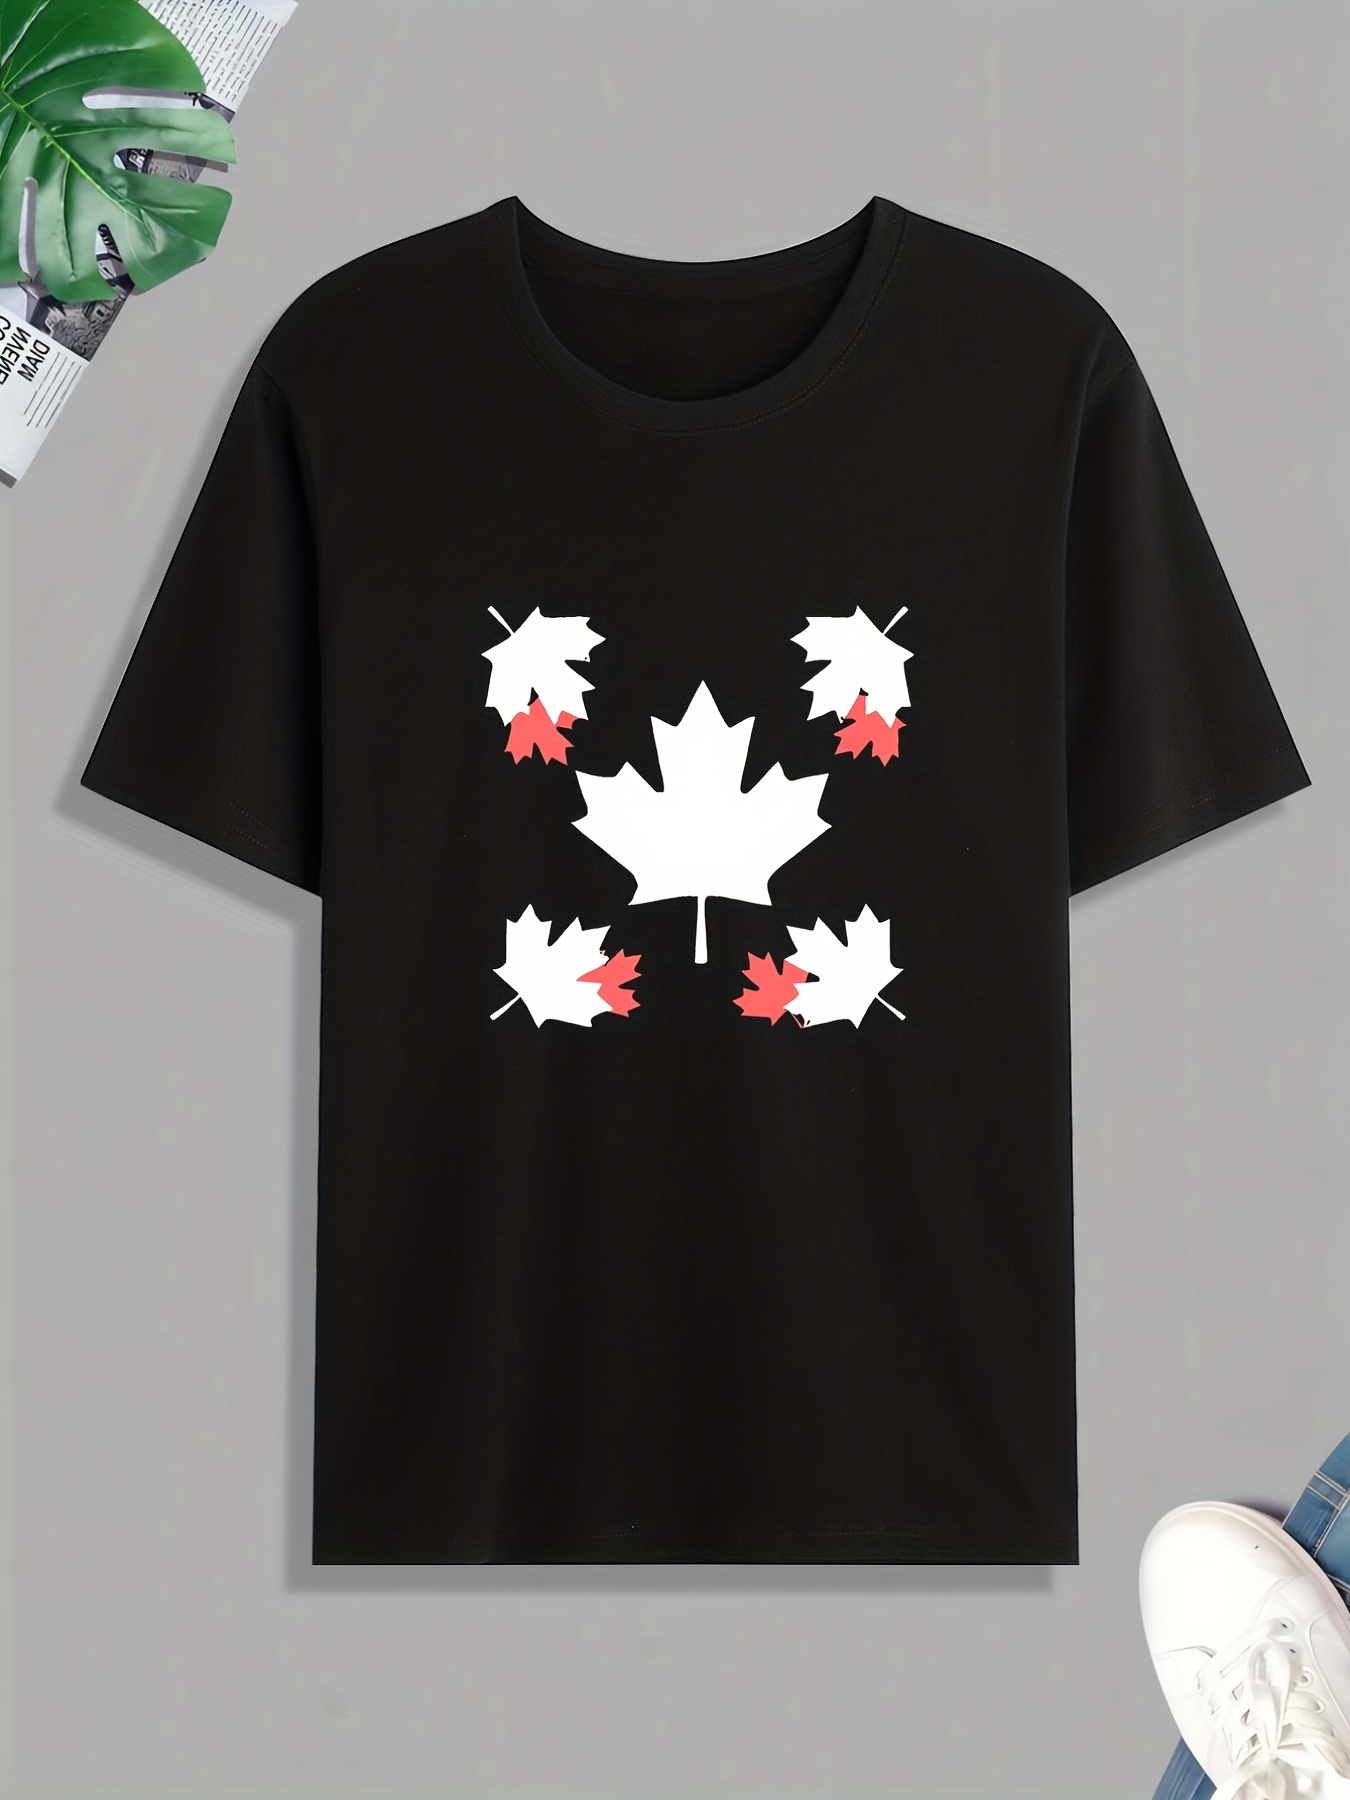 Canadian Maple Leaf T-Shirt